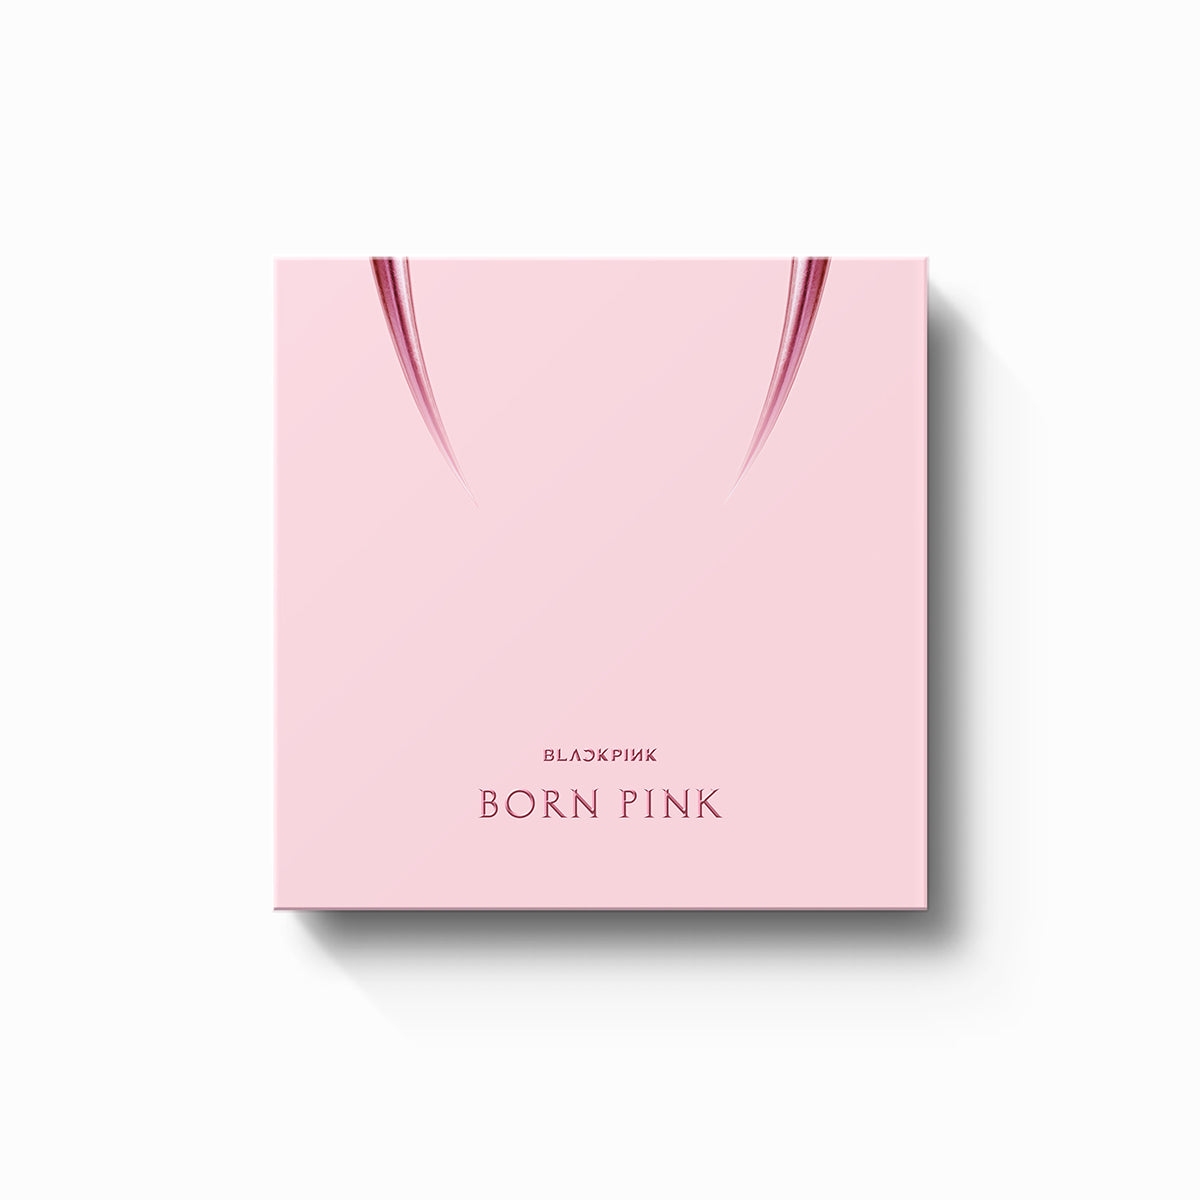 BLACKPINK - BORN PINK (VINYL LP) (LIMITED EDITION)